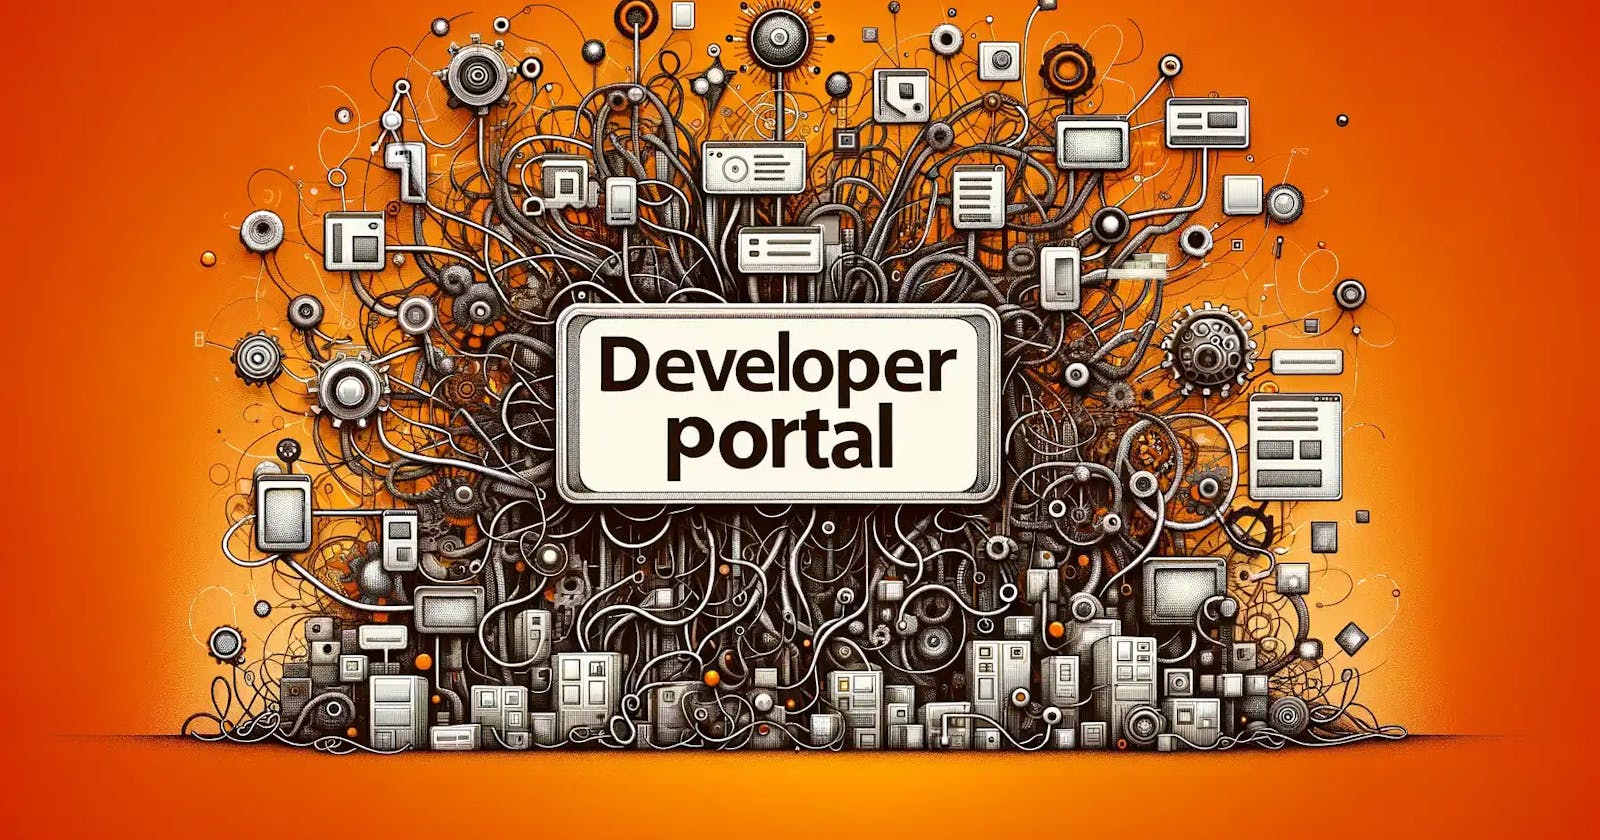 Internal developer portals aren't a silver bullet for platform engineering